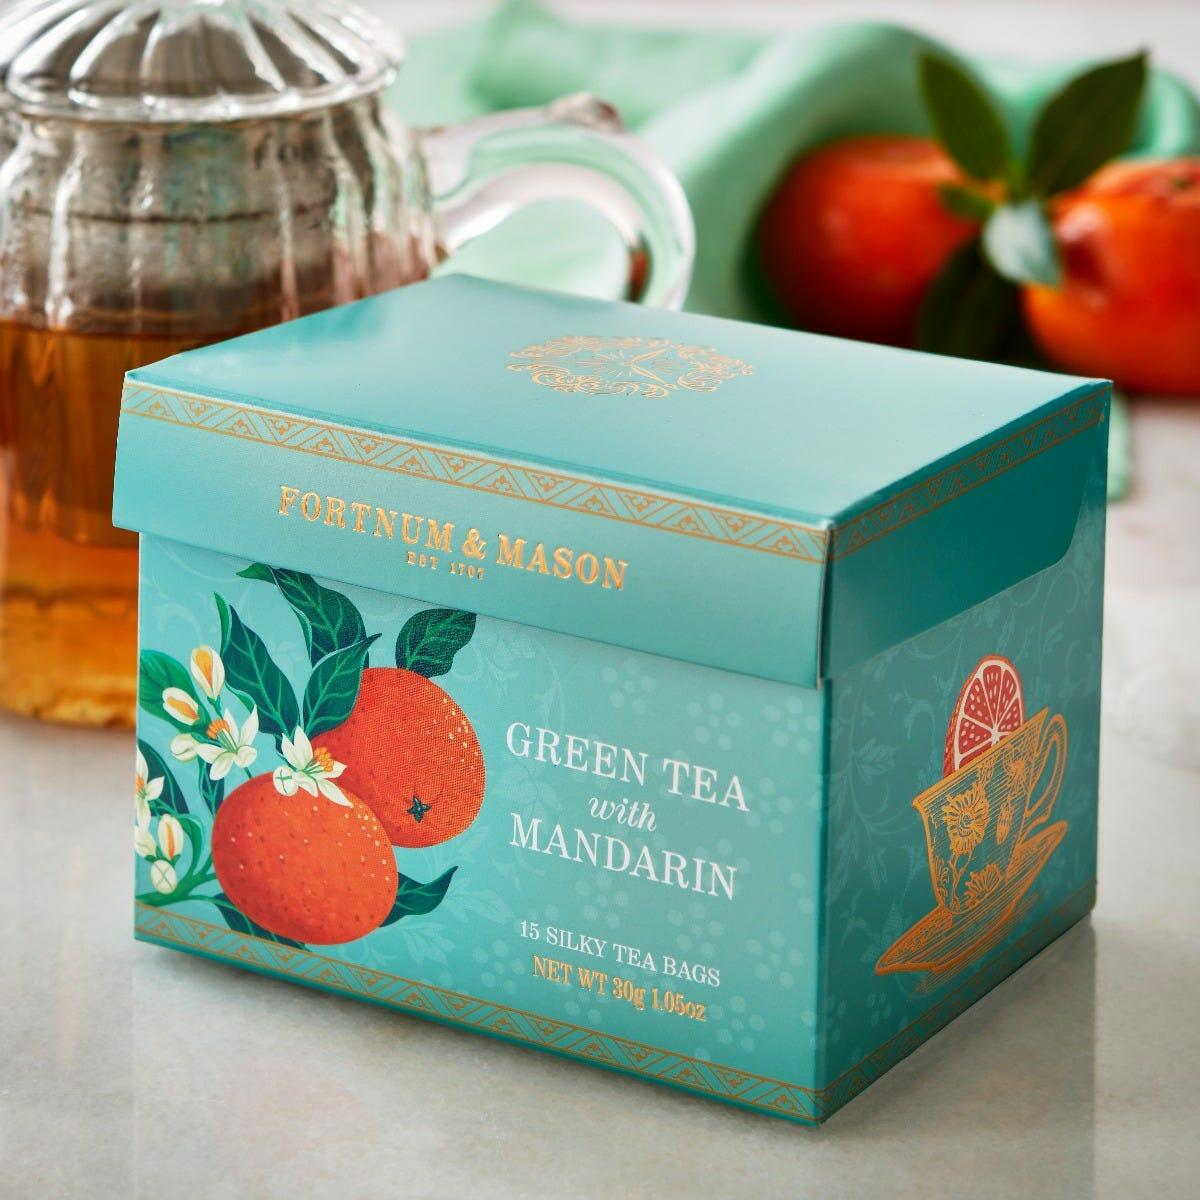 Fortnum & Mason Green Tea With Mandarin, 15 Silky Tea Bags, 30G